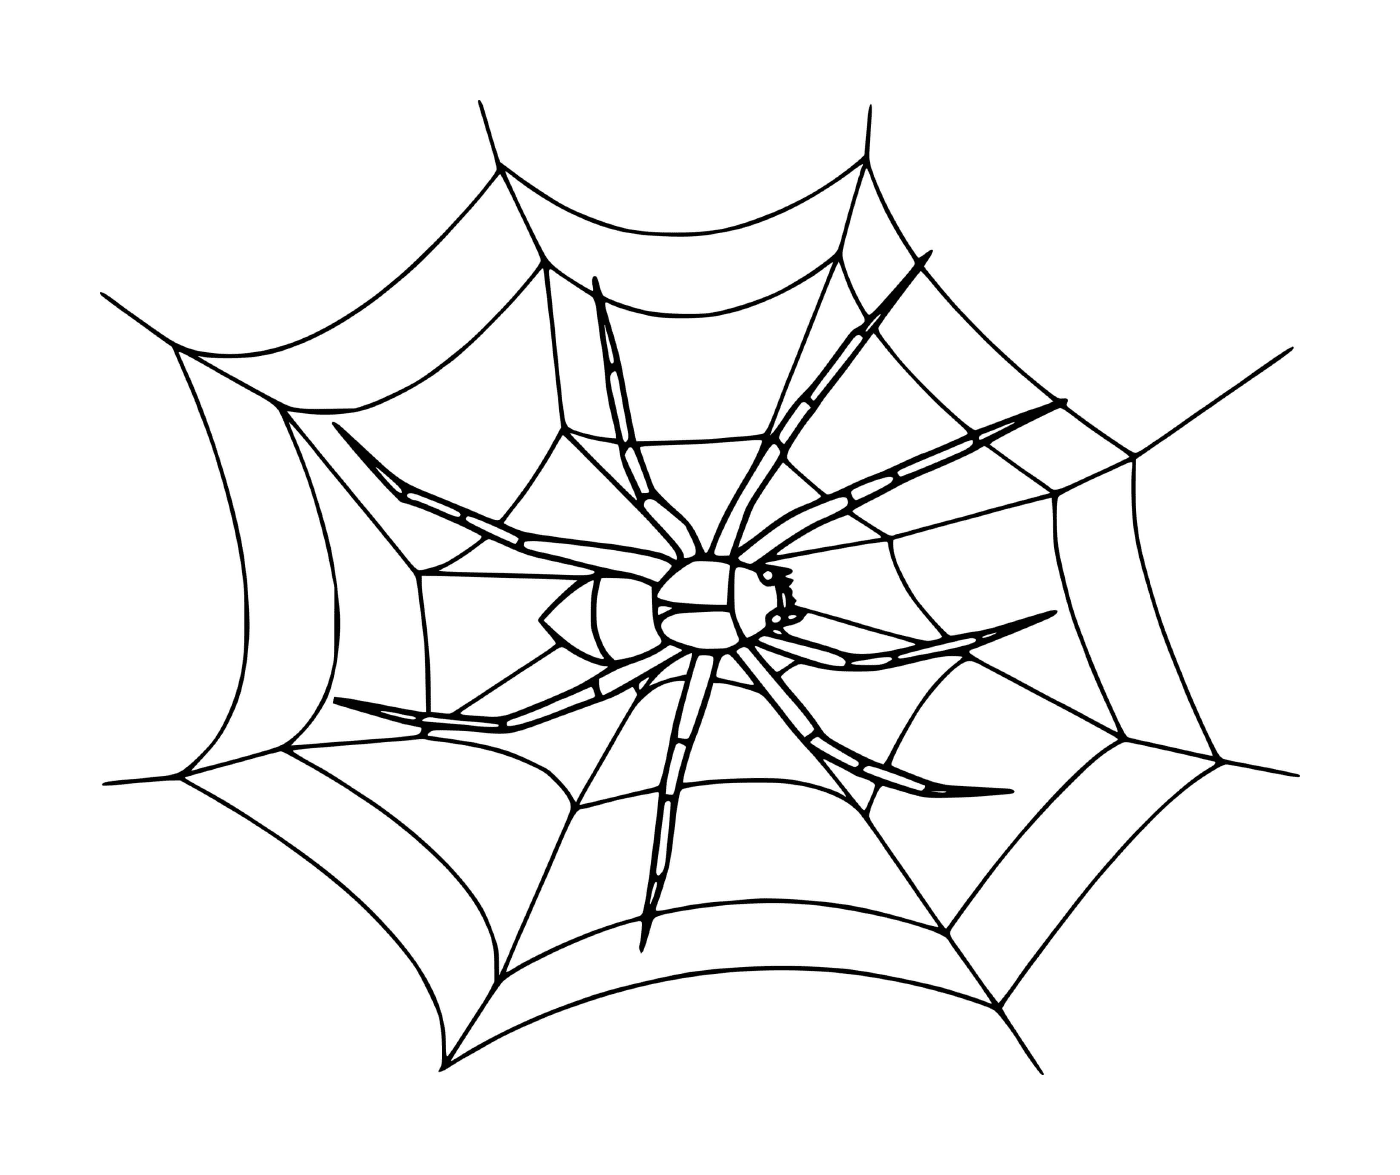  A realistic spider web 